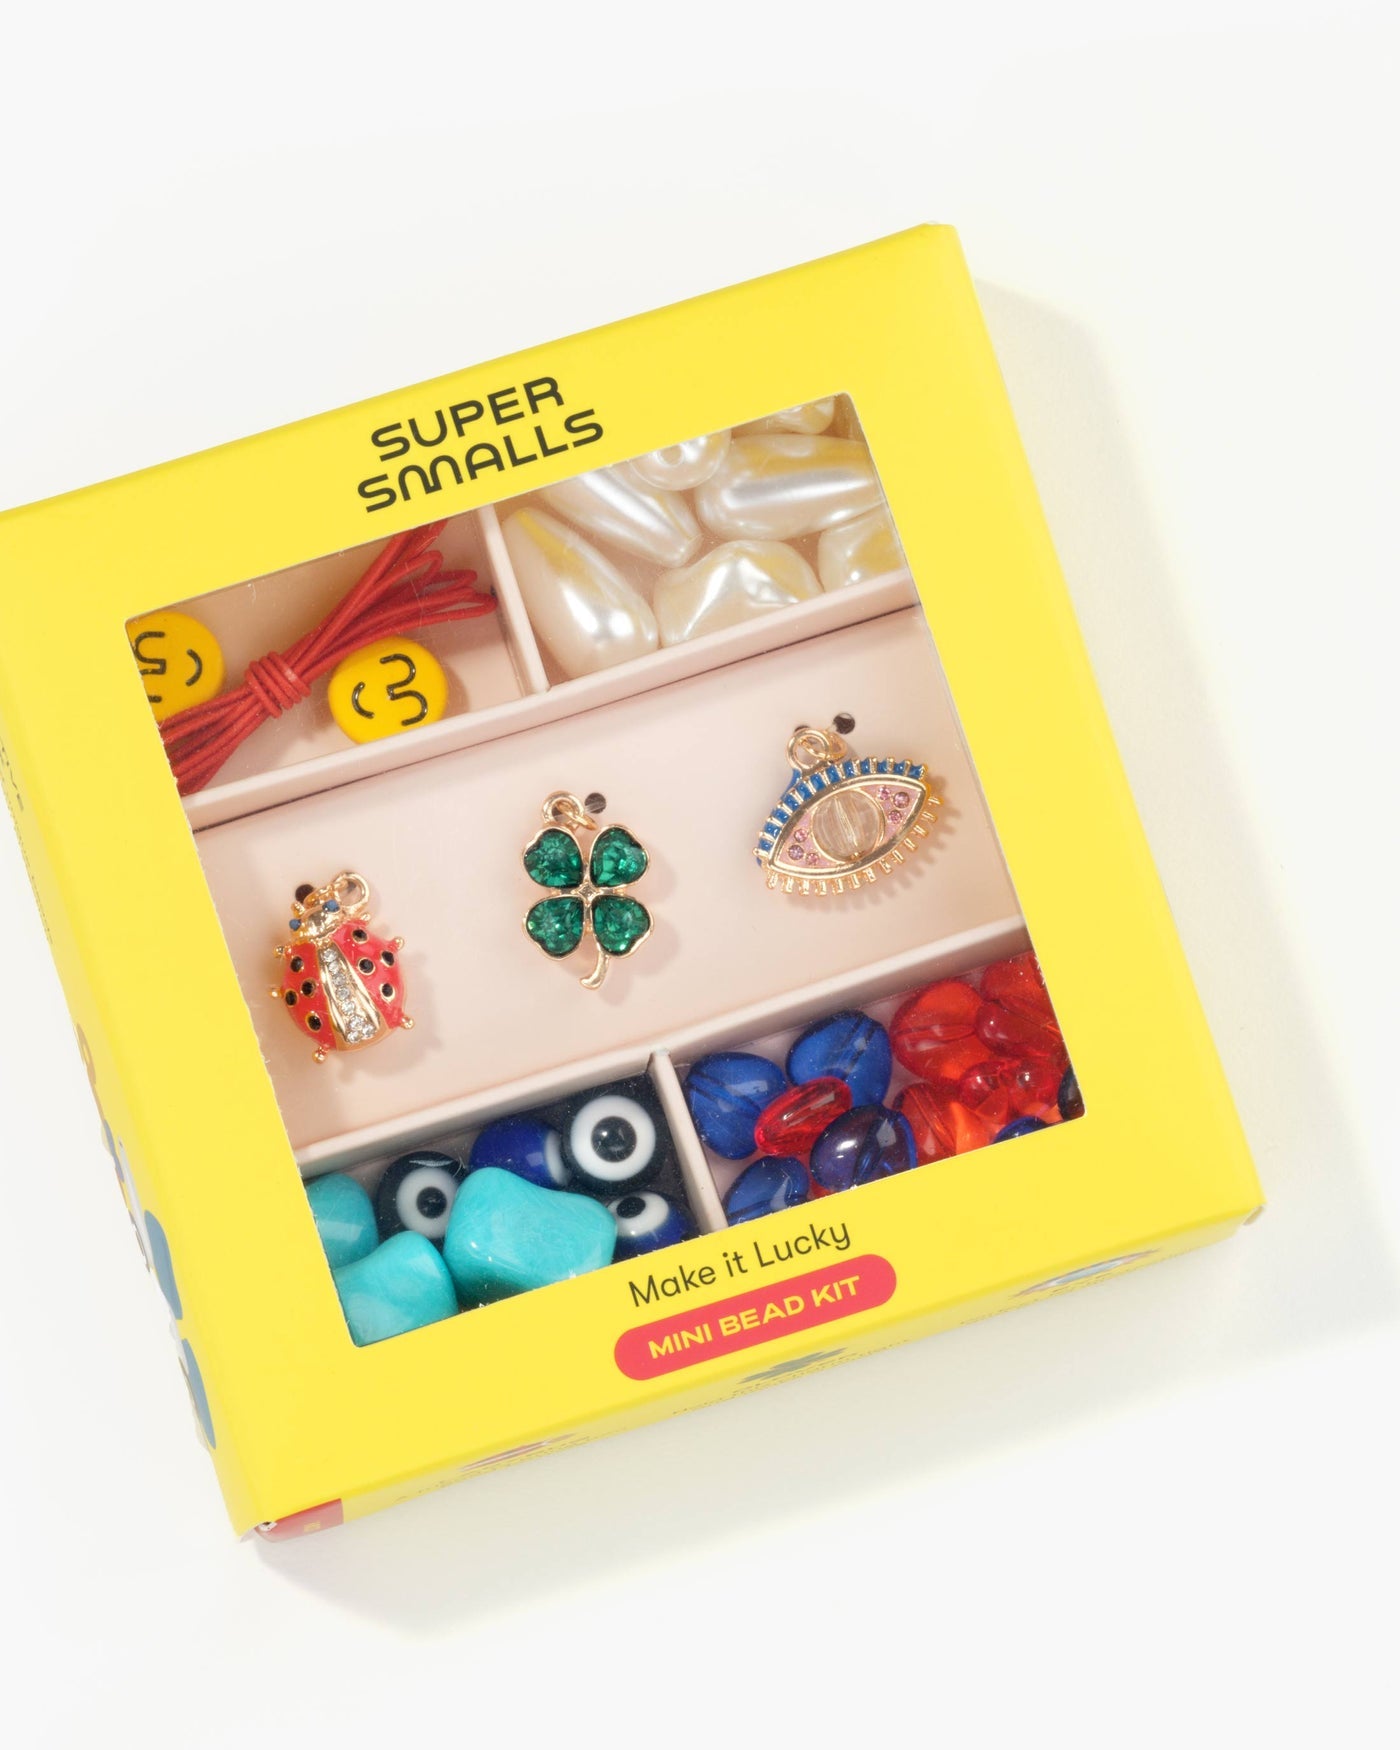 Super Smalls Make It Lucky Mini Bead Kit